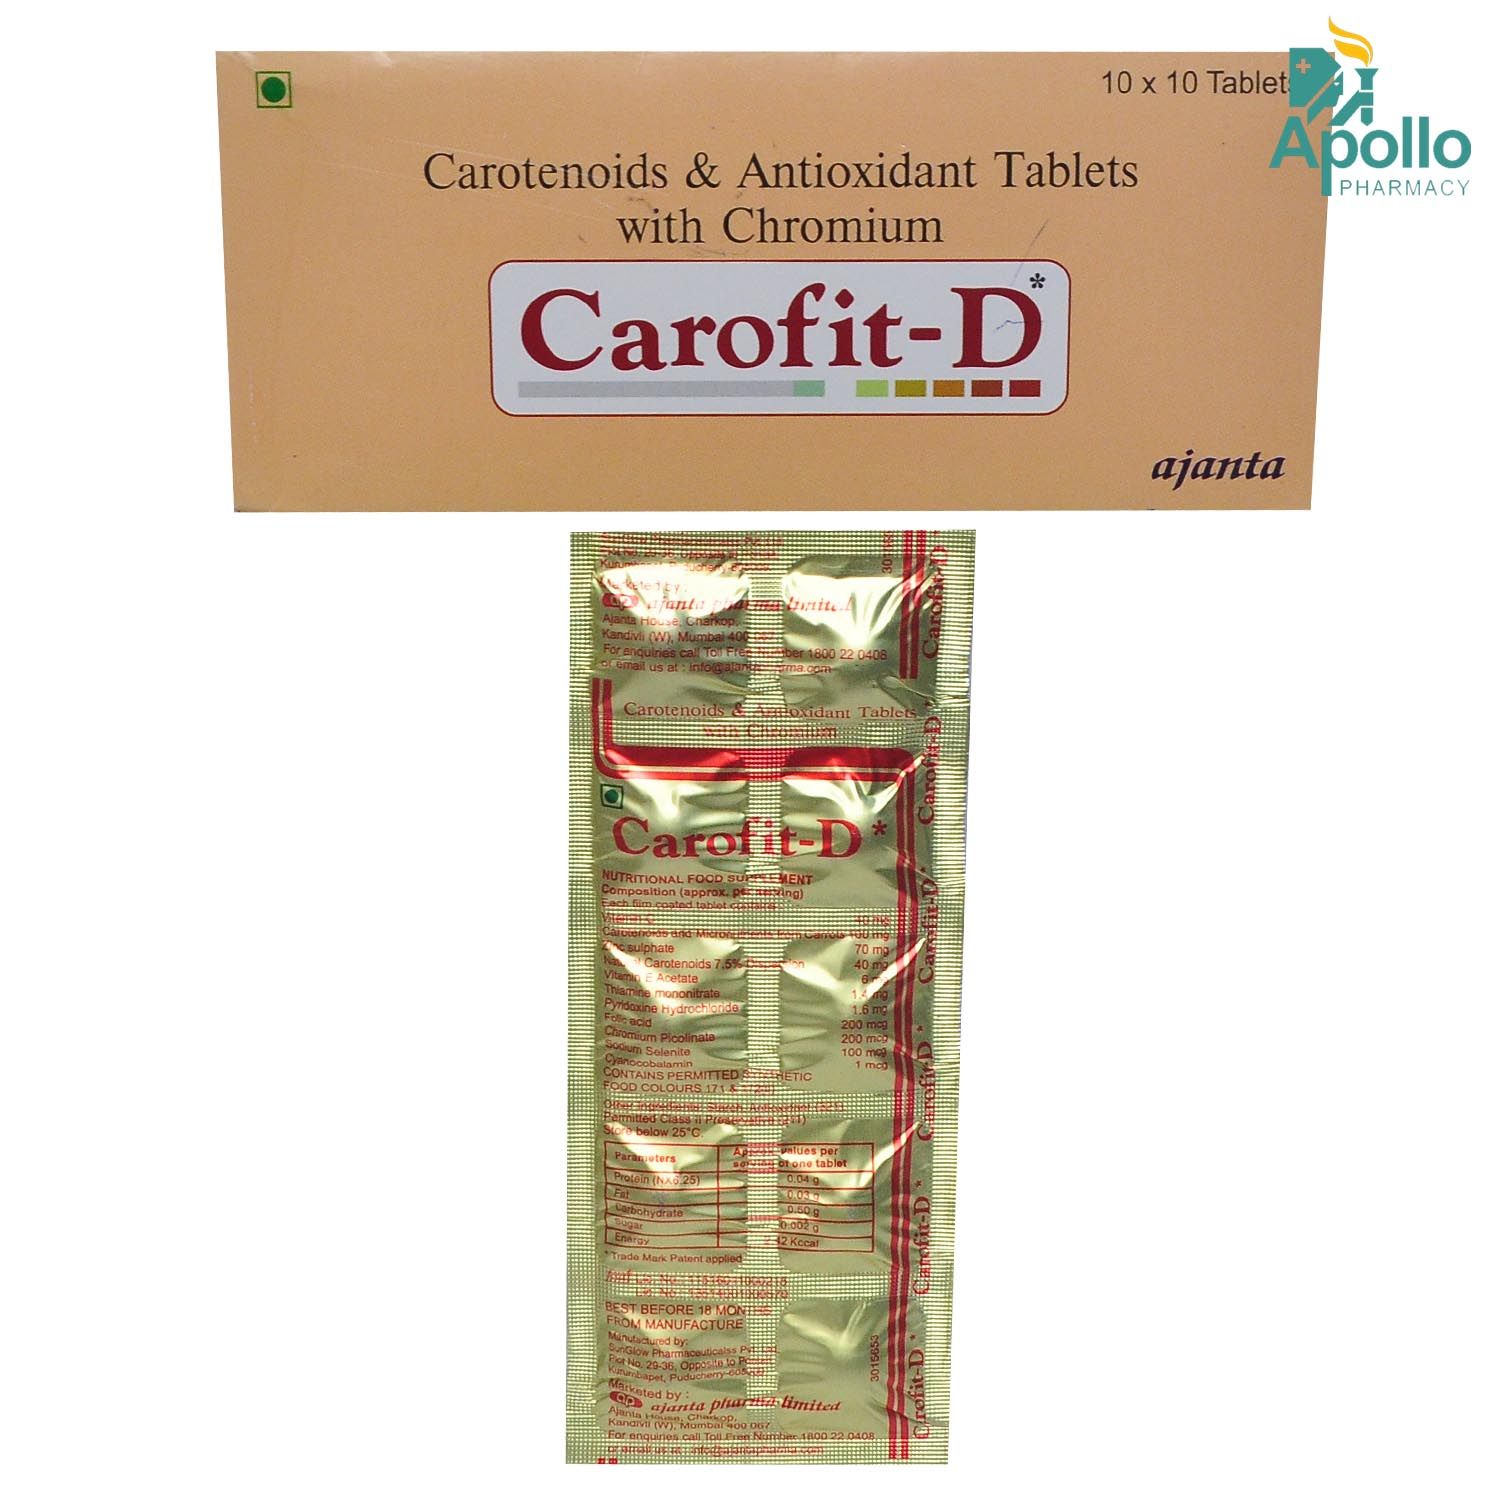 Carofit D Tablet | Uses, Benefits, Price | Apollo Pharmacy